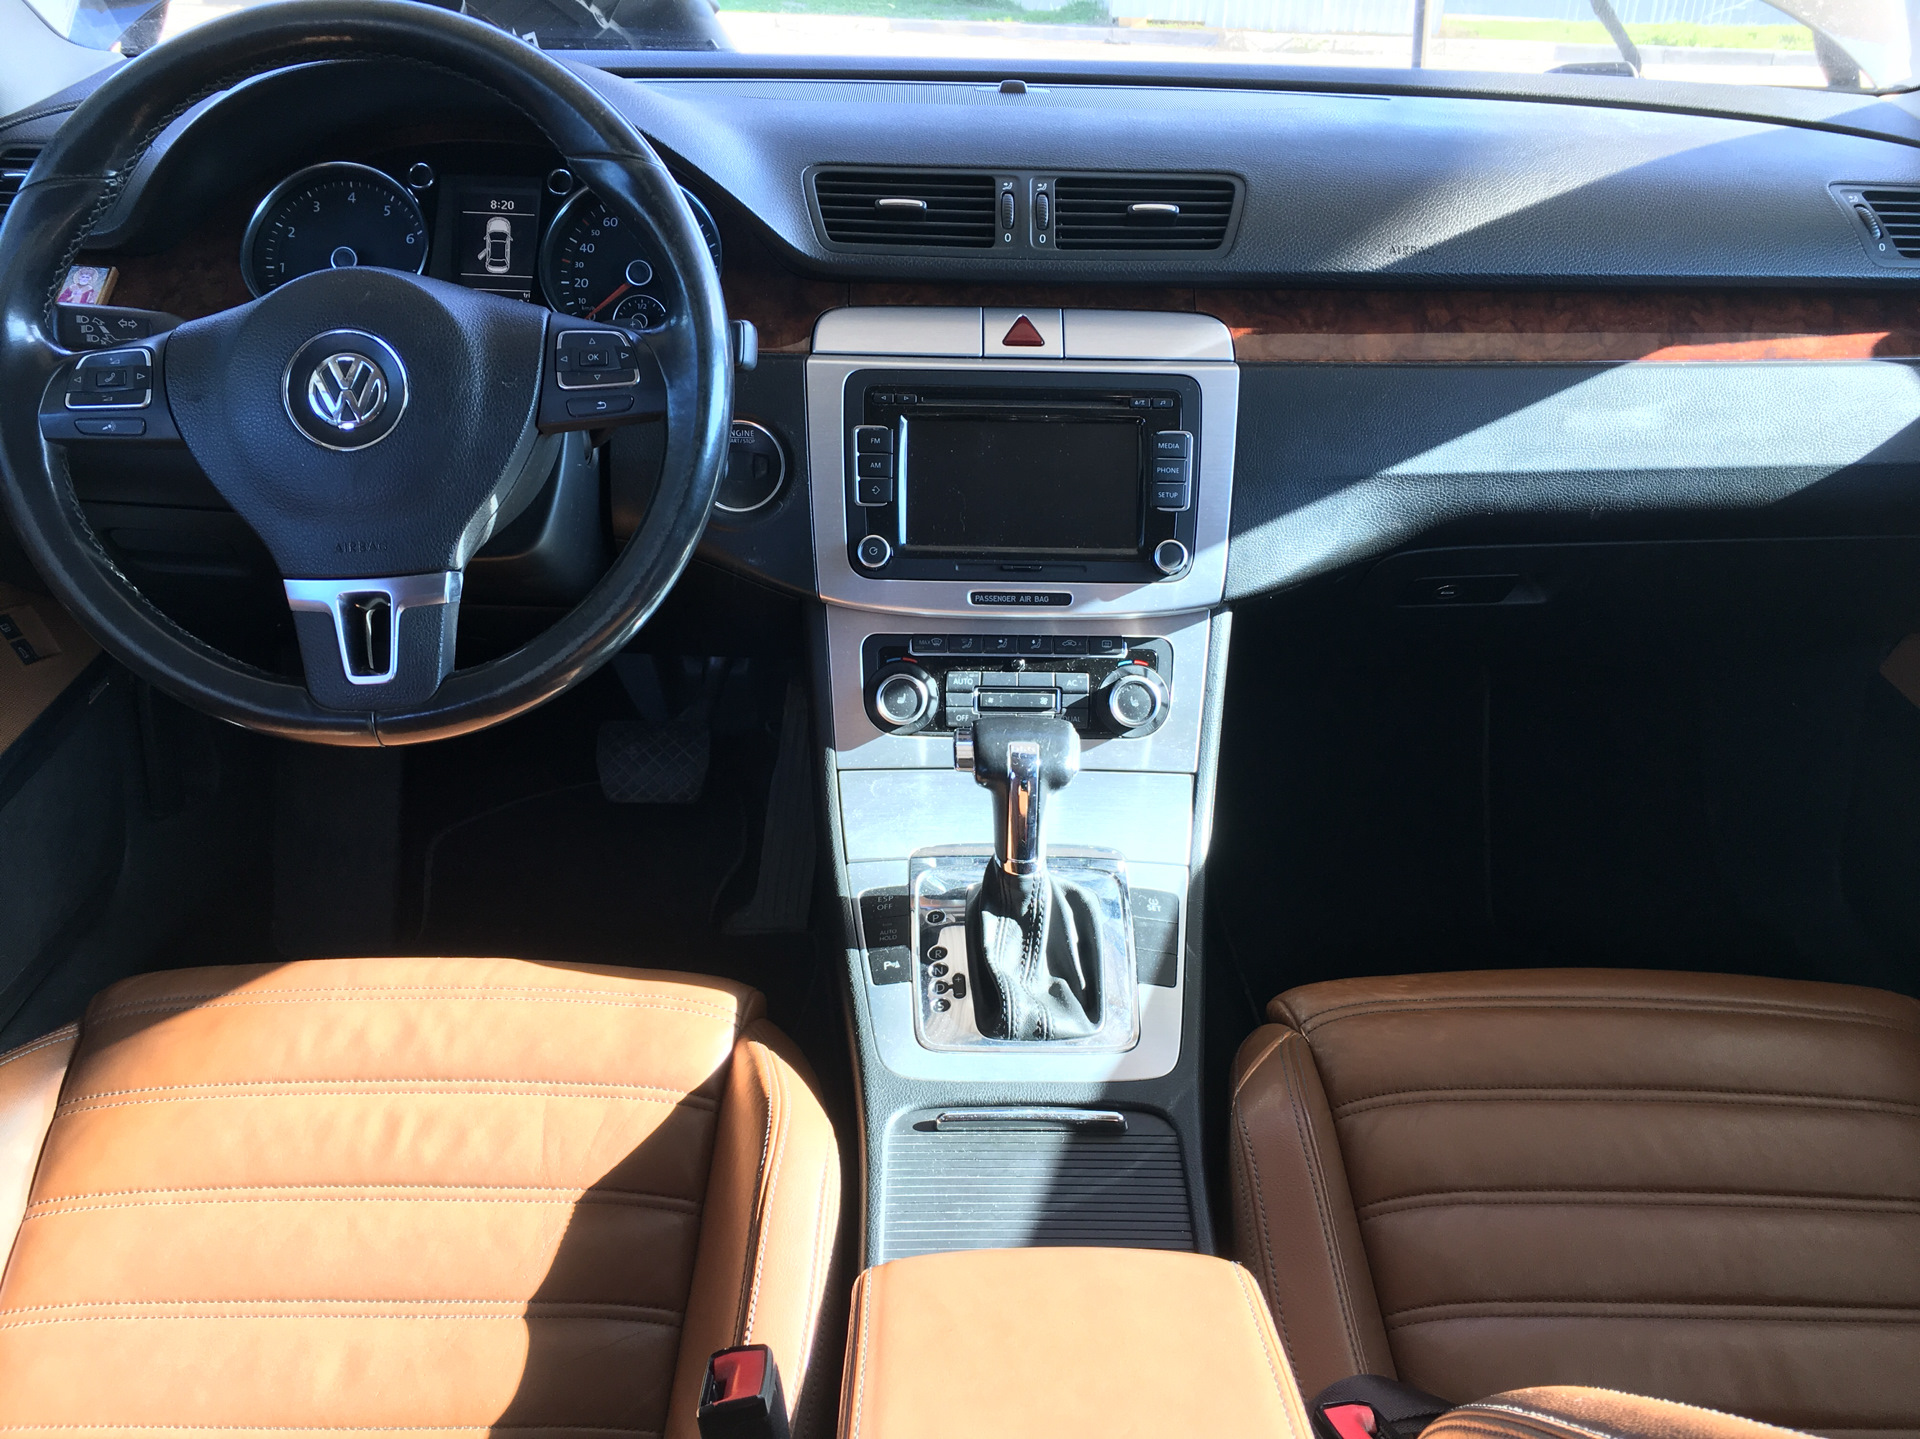 Салон сс. Volkswagen Passat cc 2010 Interior. Passat cc 2008 салон. Passat cc 2014 салон. Volkswagen Passat cc 2013 салон.